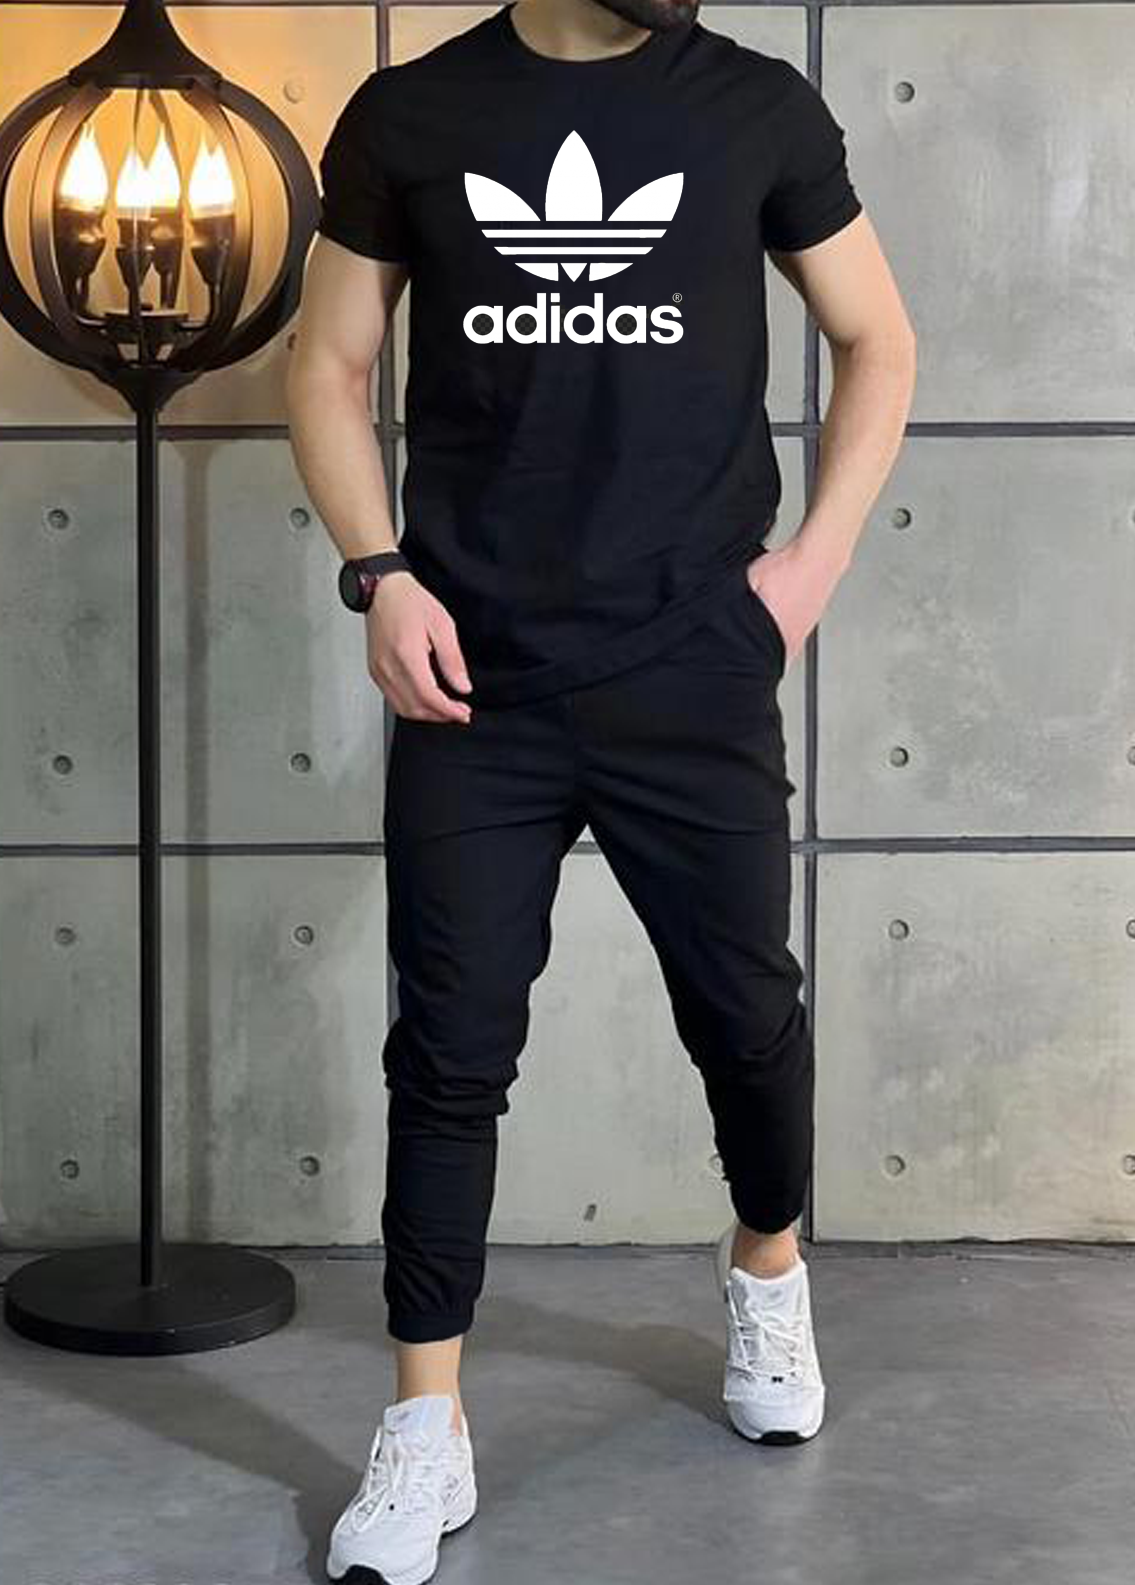 adidas track suit black